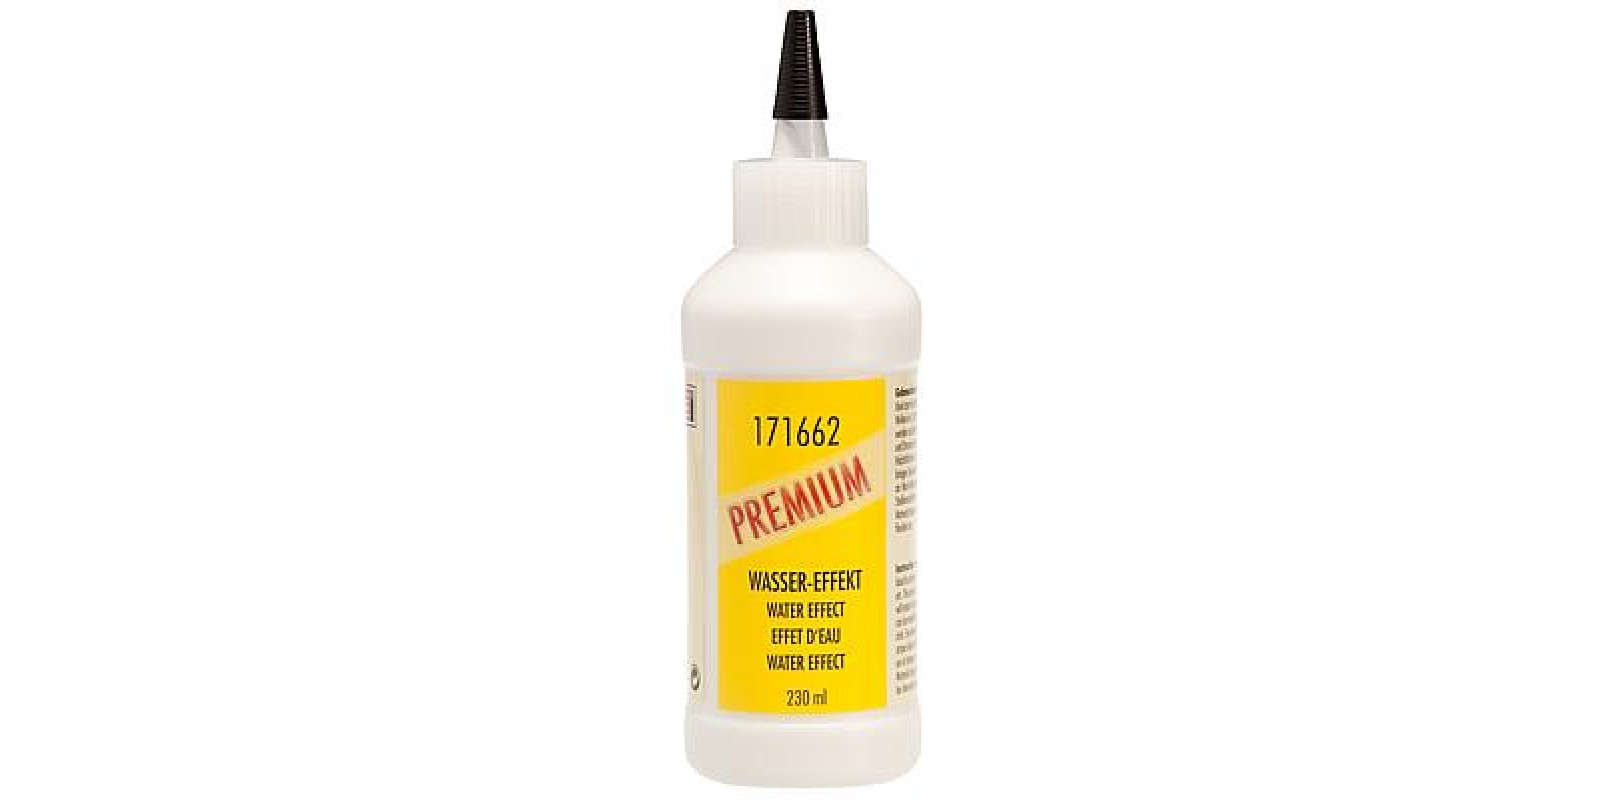 Fa171662 	 PREMIUM Water effect, 230 ml